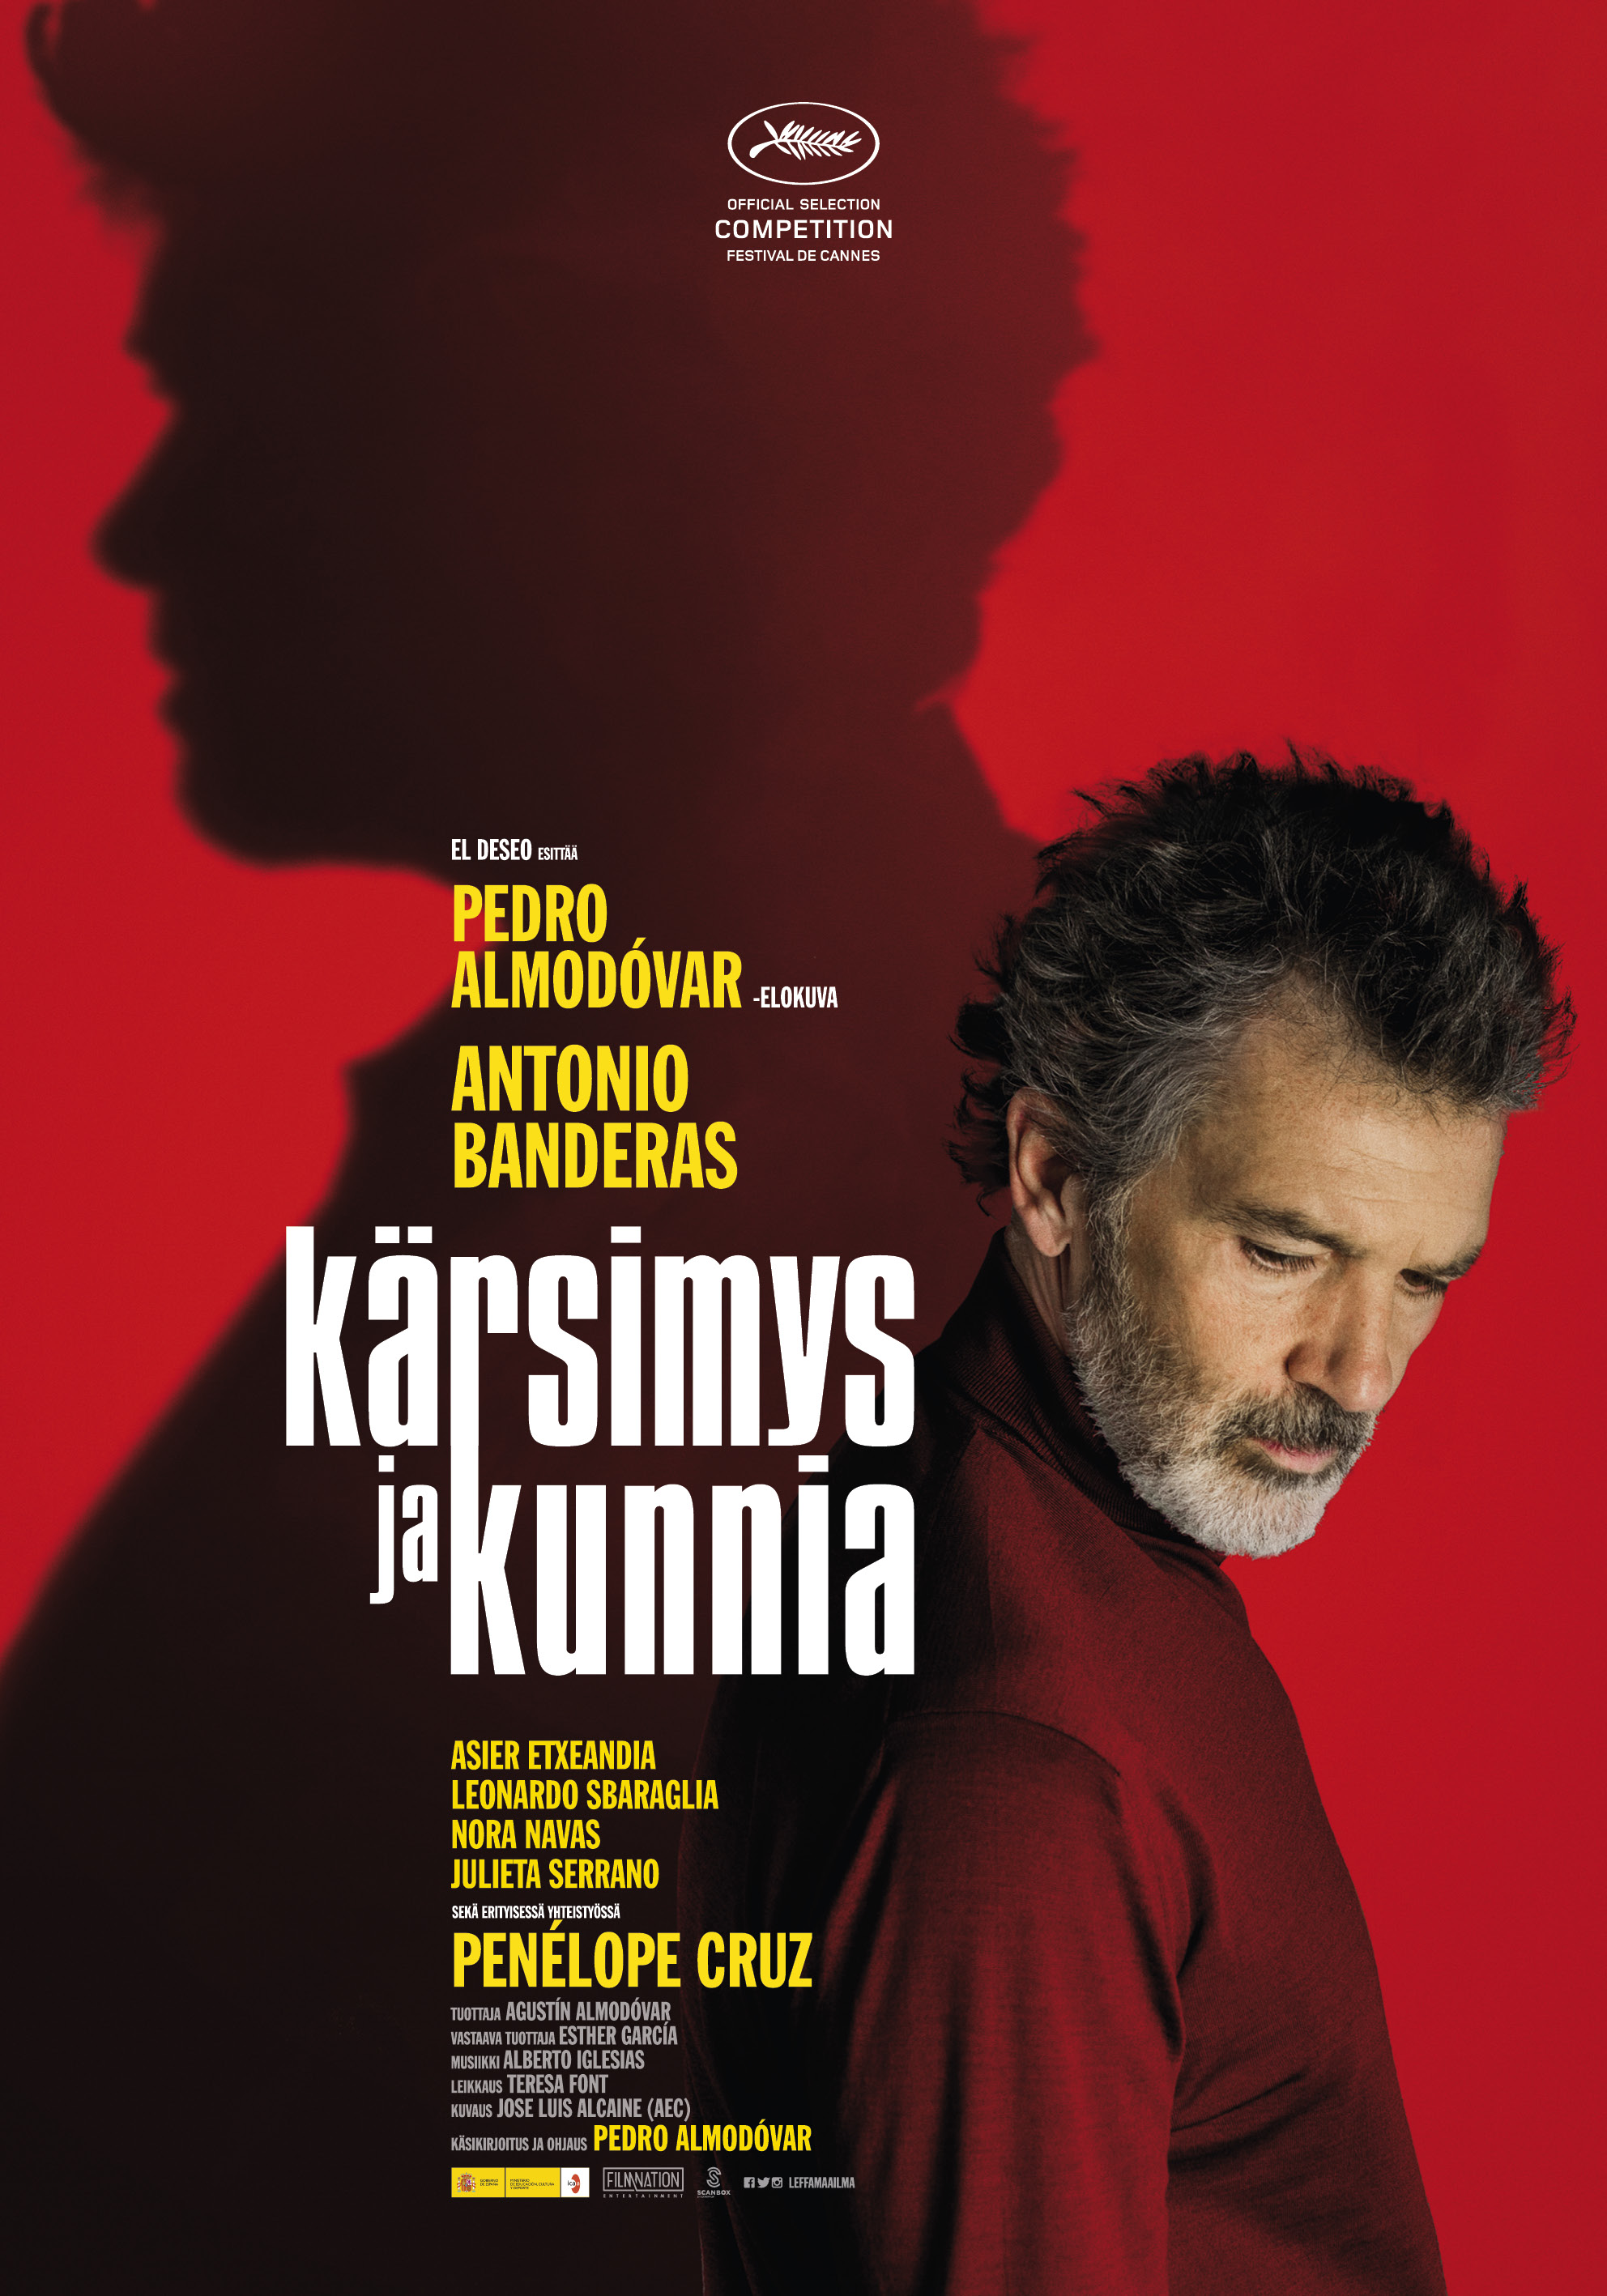 https://www.filmikamari.fi/pressit/uploads/image/karsimys_ja_kunnia_juliste.jpg